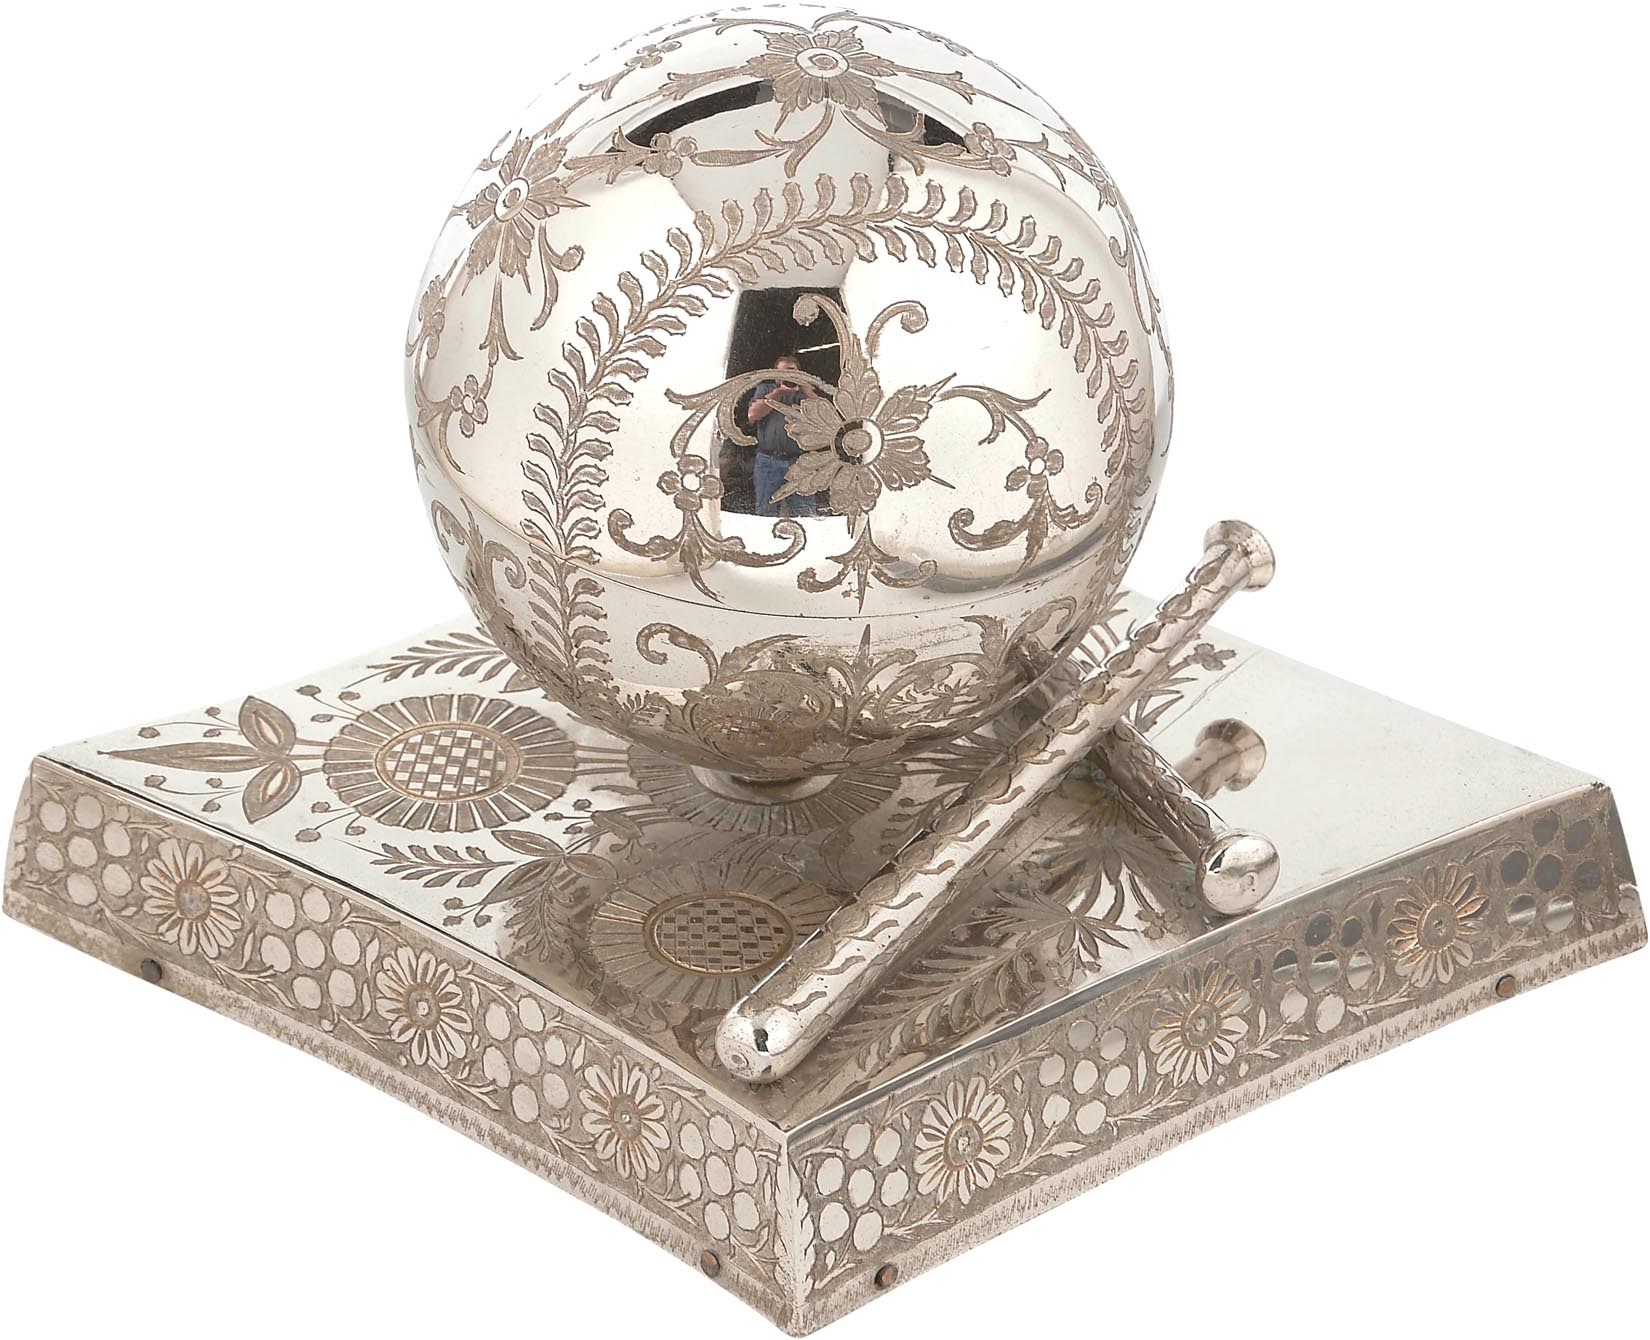 Early Baseball - 19th Century Silver Baseball Music Box